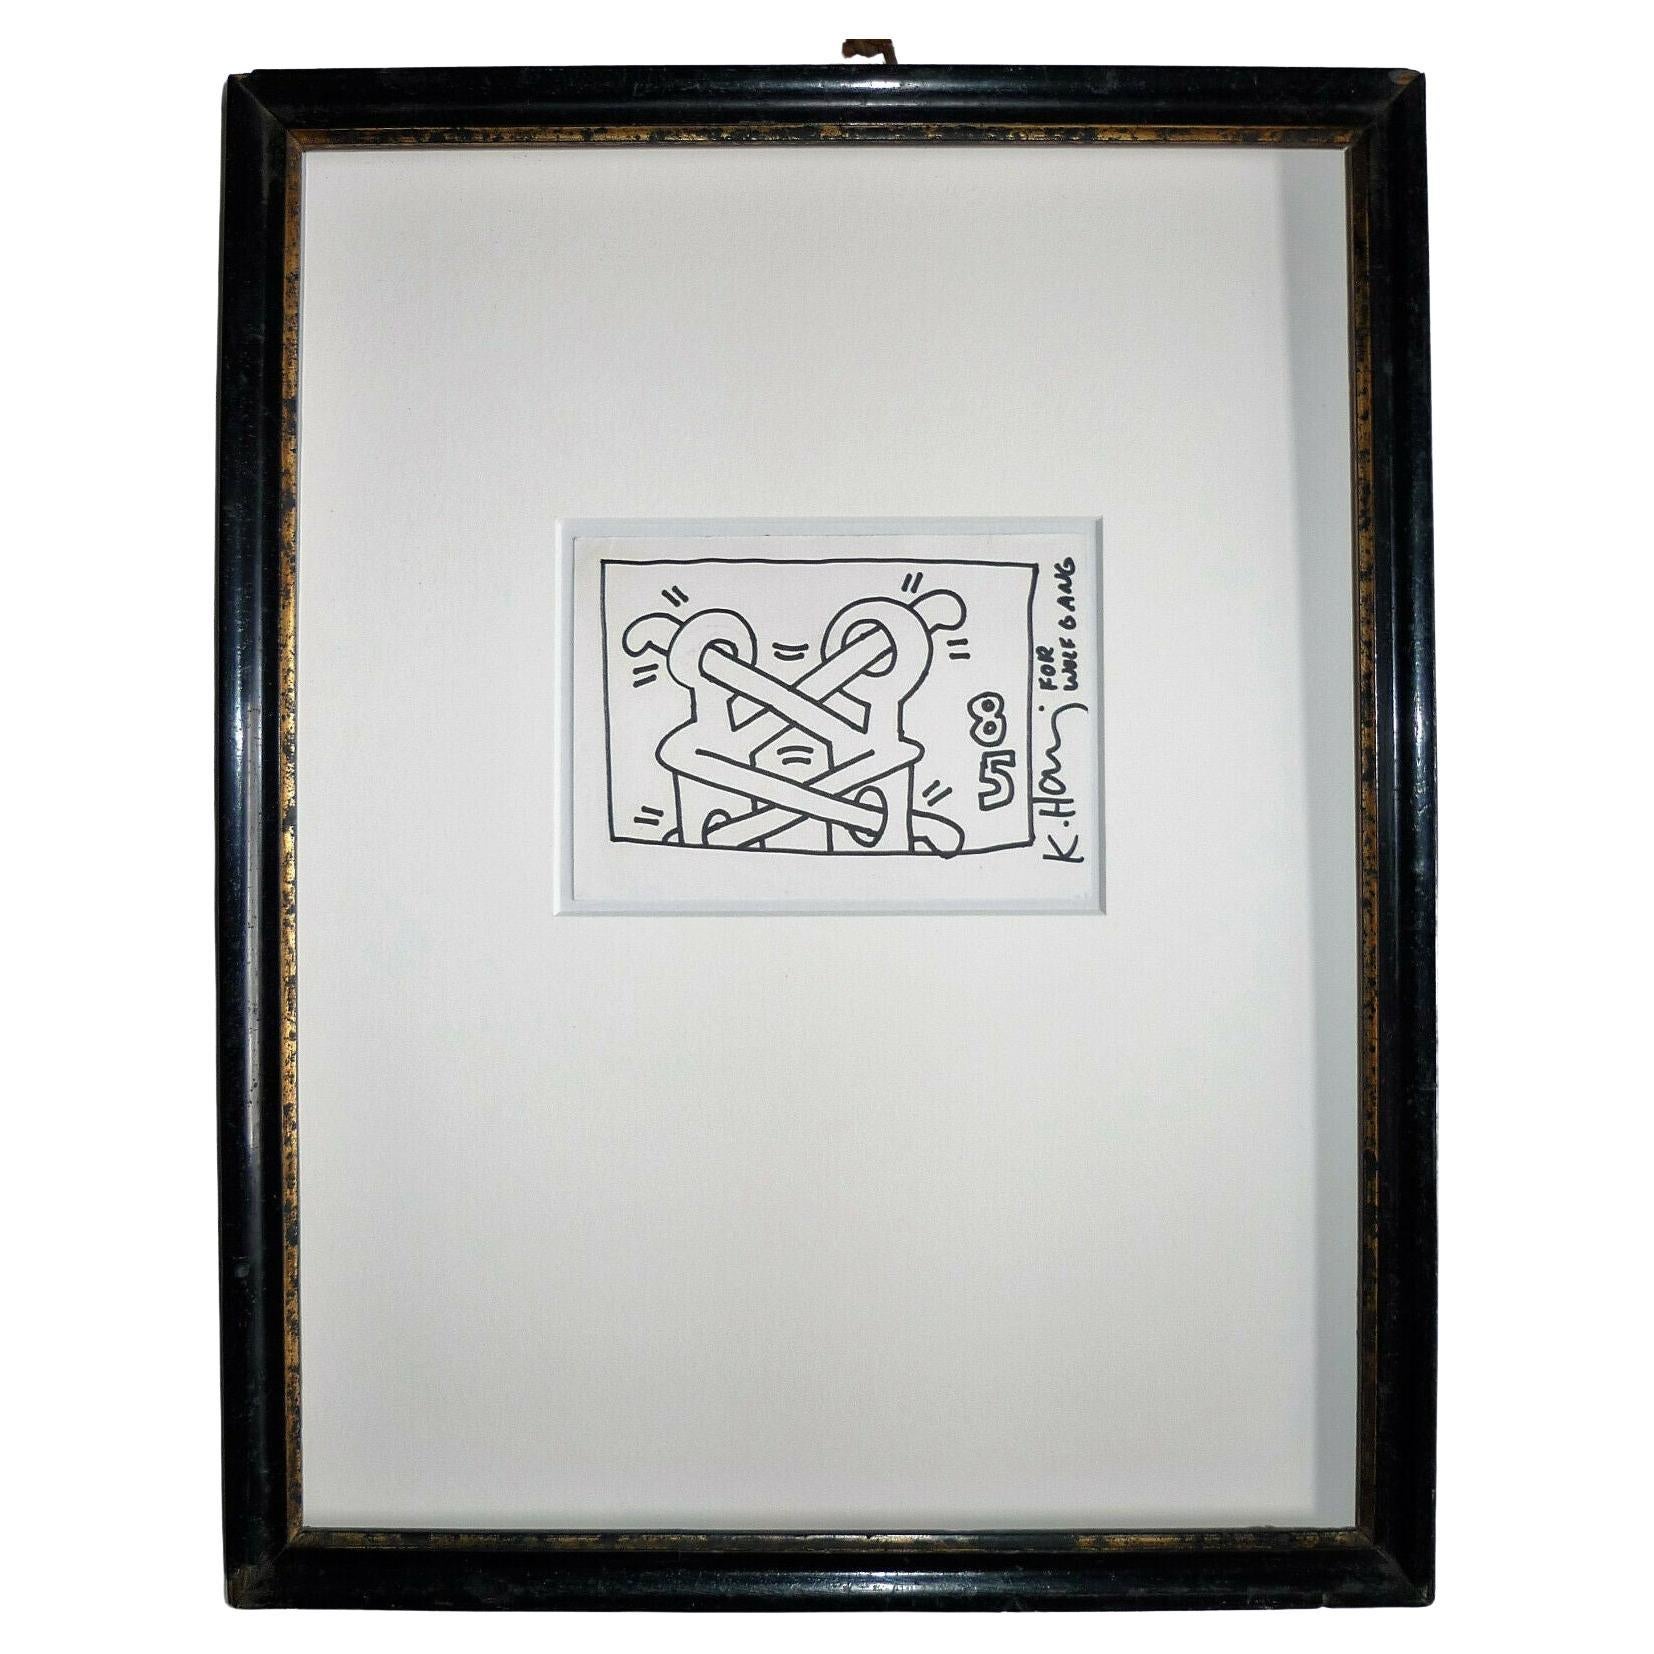 Rare Keith Haring Original Drawing Art Attack on AIDS